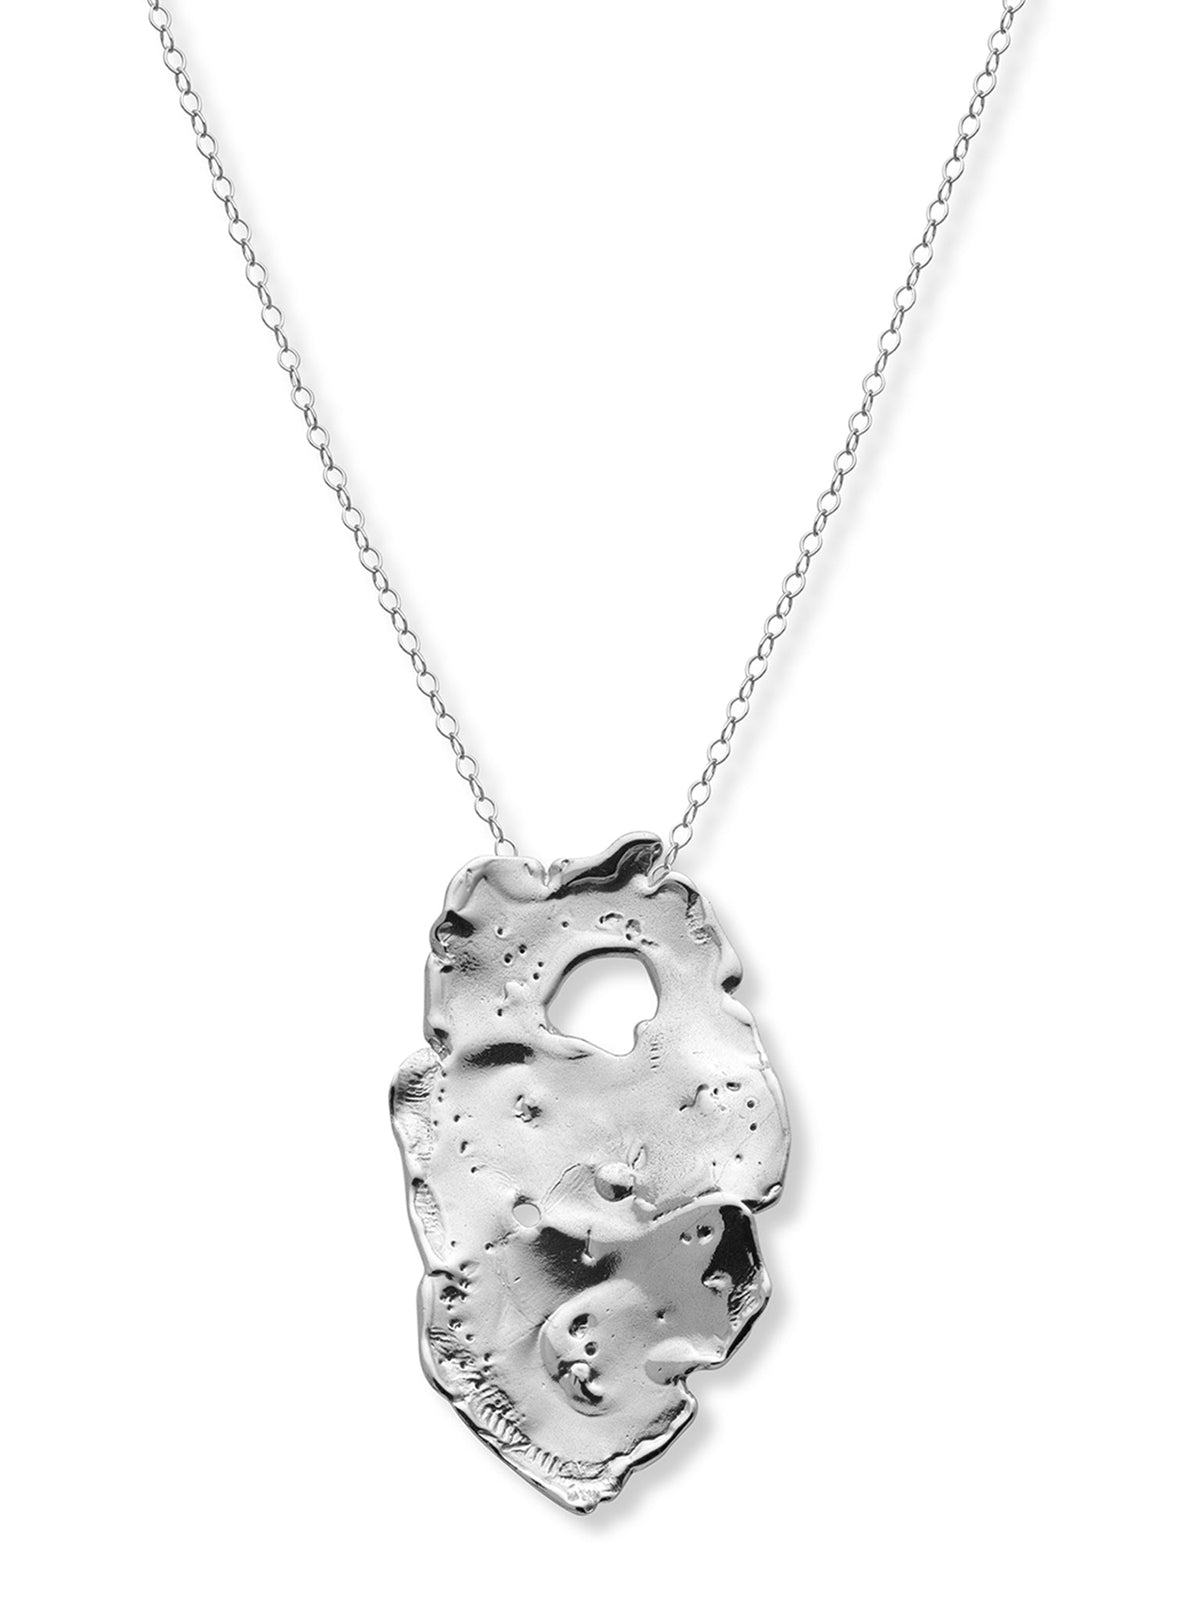 Talisman Full Moon Necklace Silver